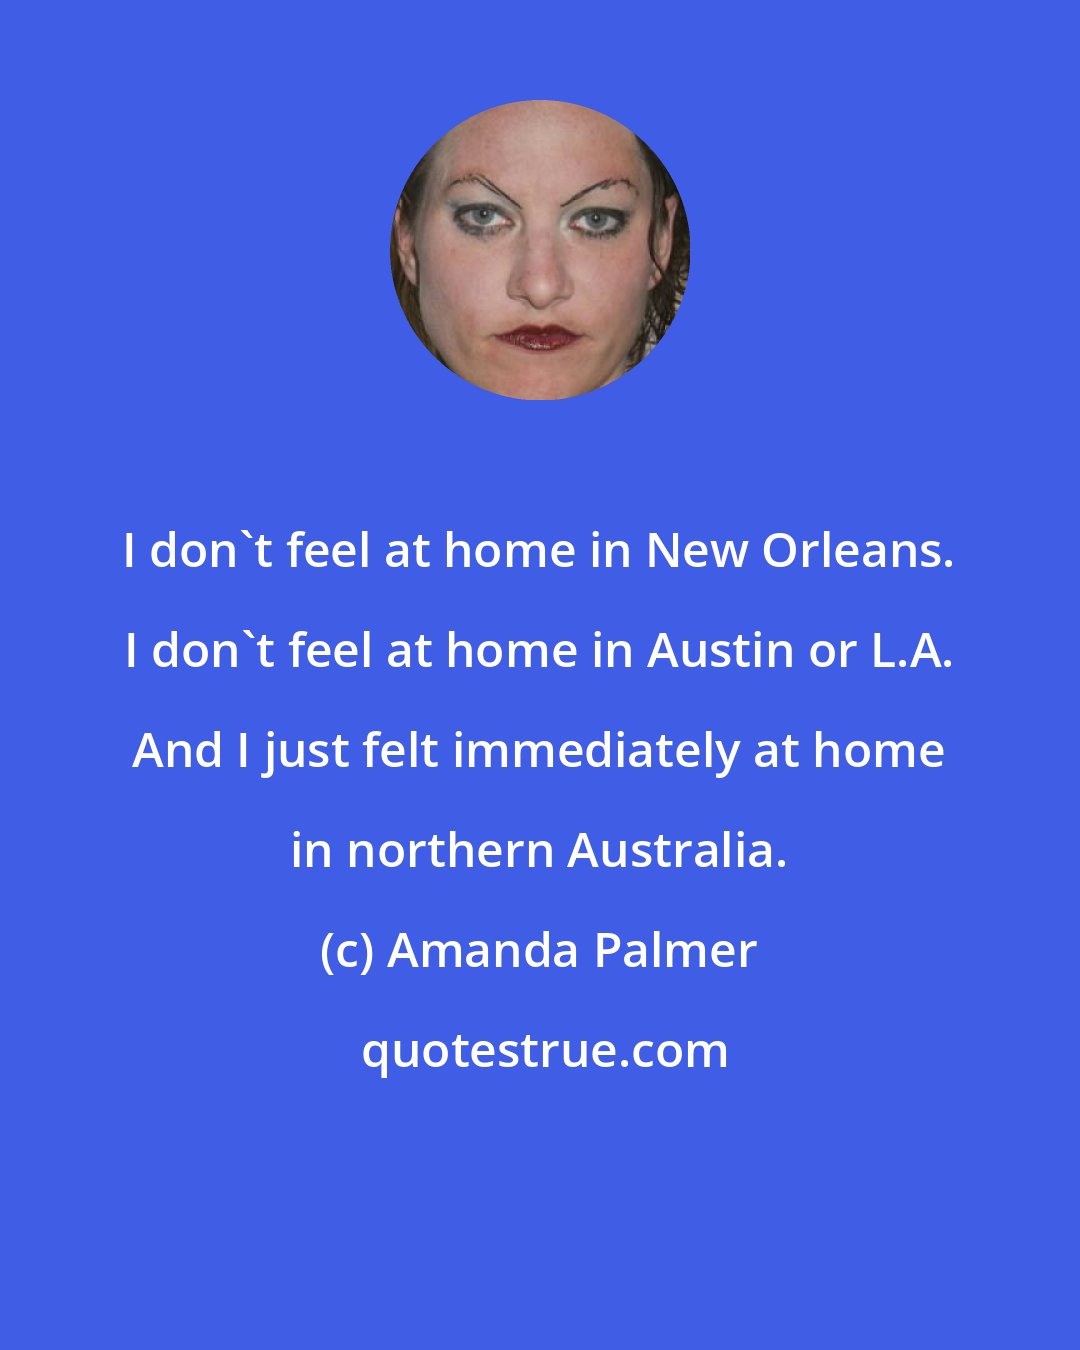 Amanda Palmer: I don't feel at home in New Orleans. I don't feel at home in Austin or L.A. And I just felt immediately at home in northern Australia.